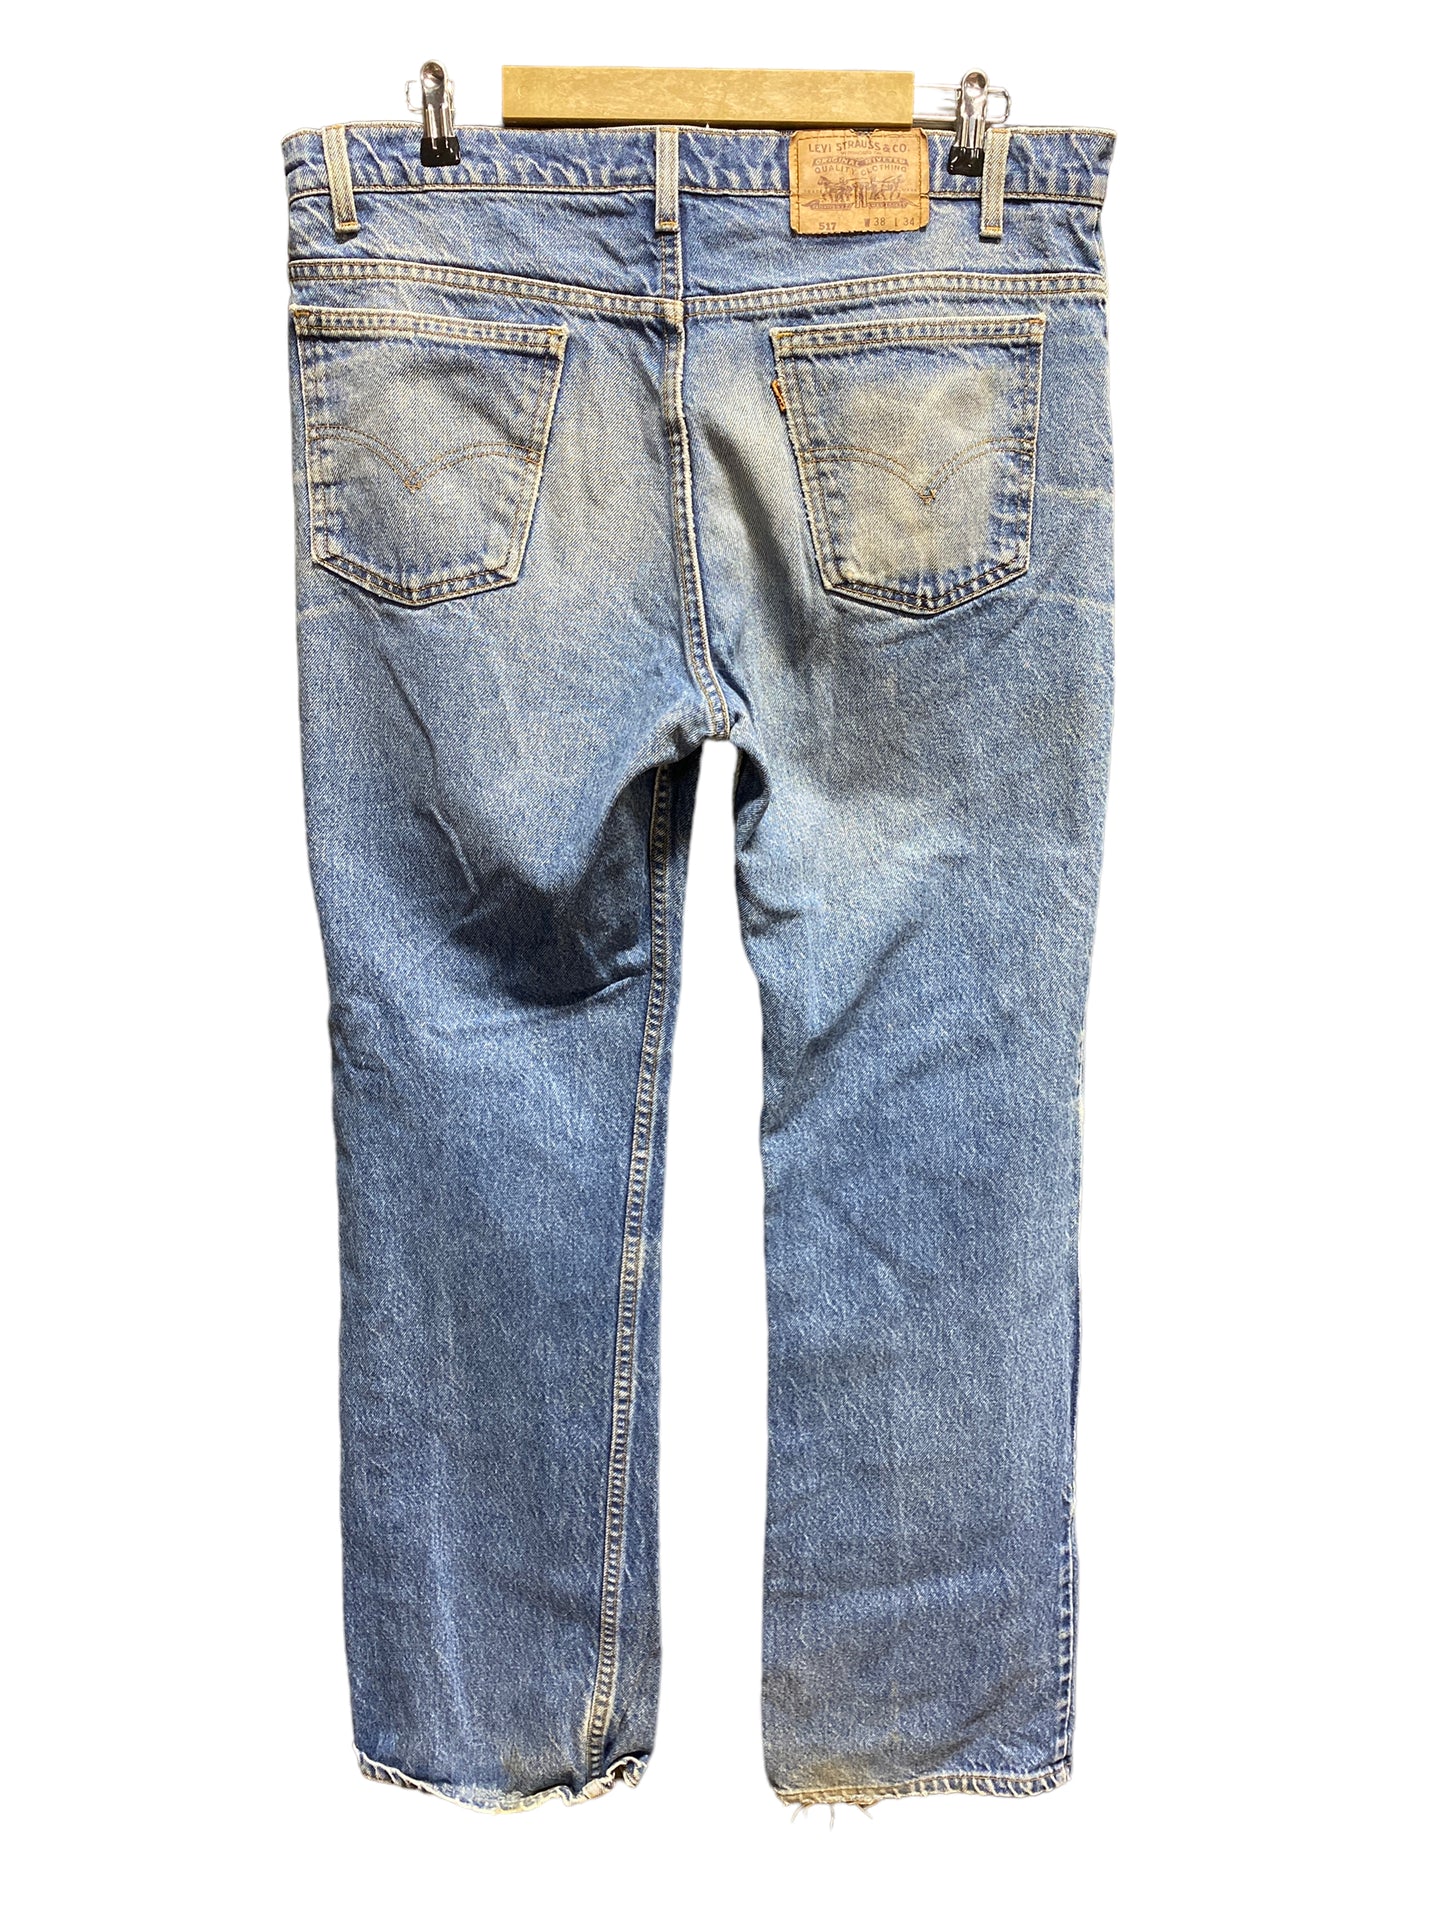 Vintage Levi 517 Orange Tab Made in USA Denim Medium Wash Jeans Size 36x32